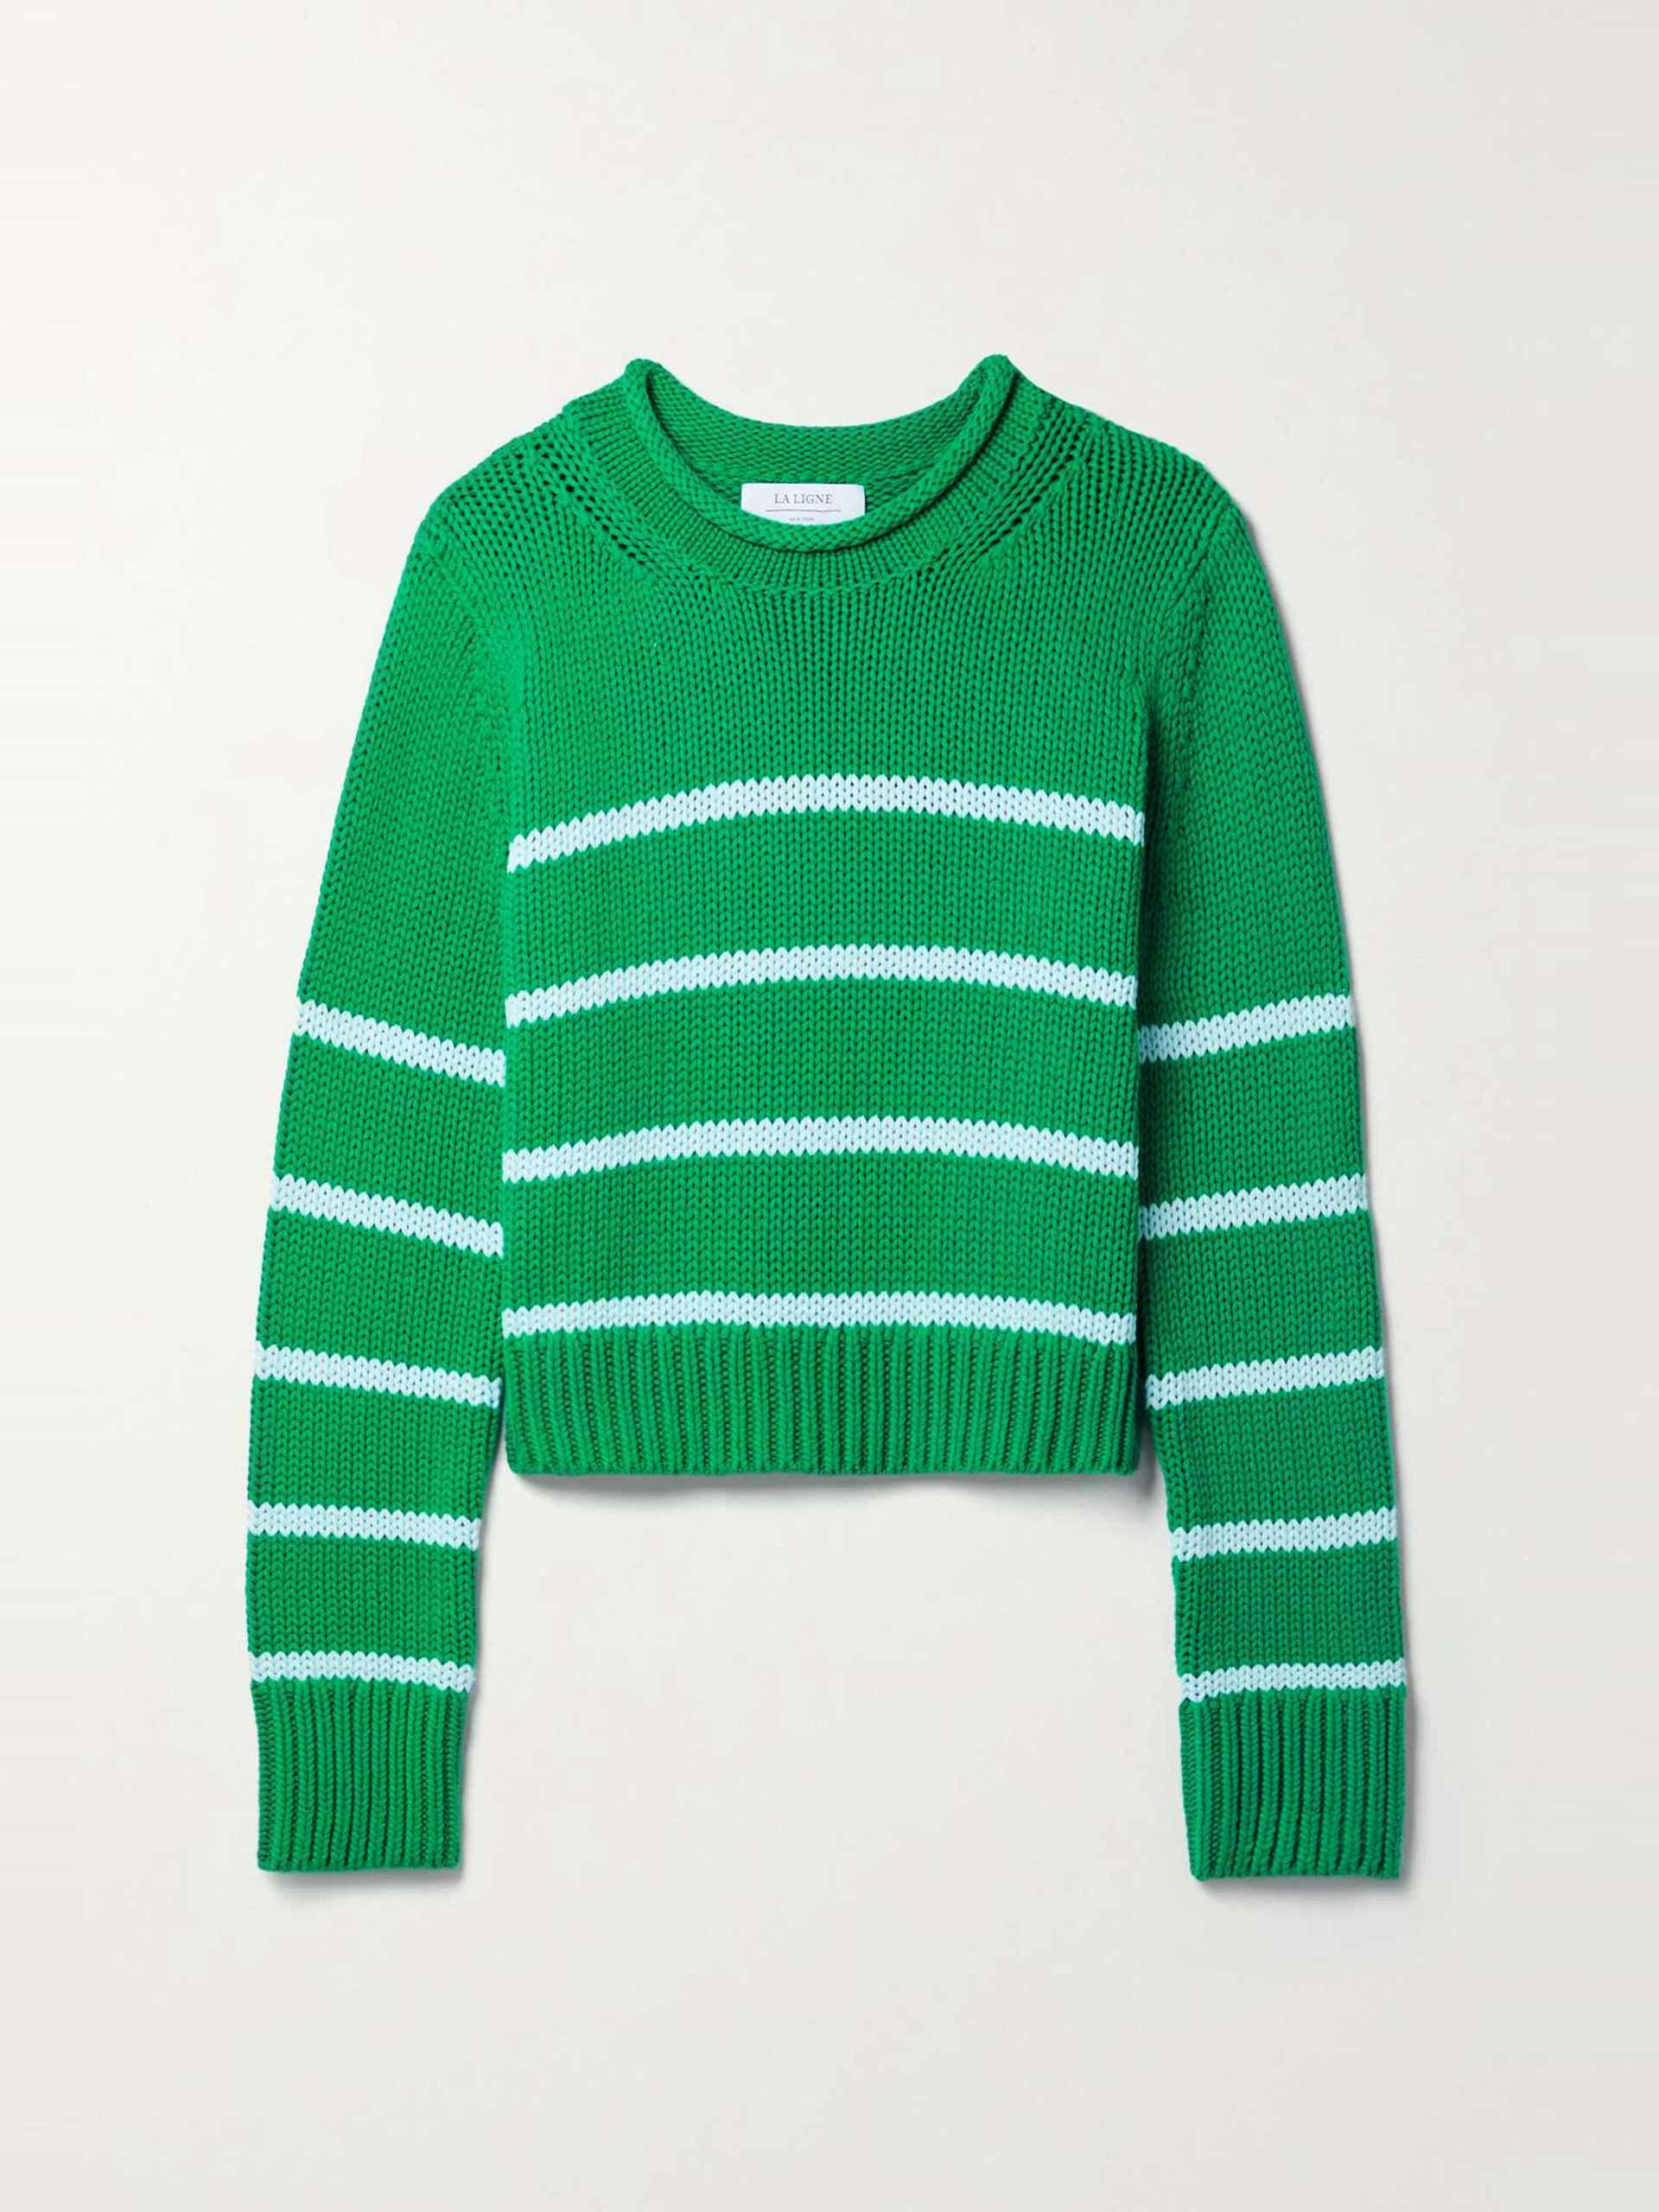 Green striped cotton sweater